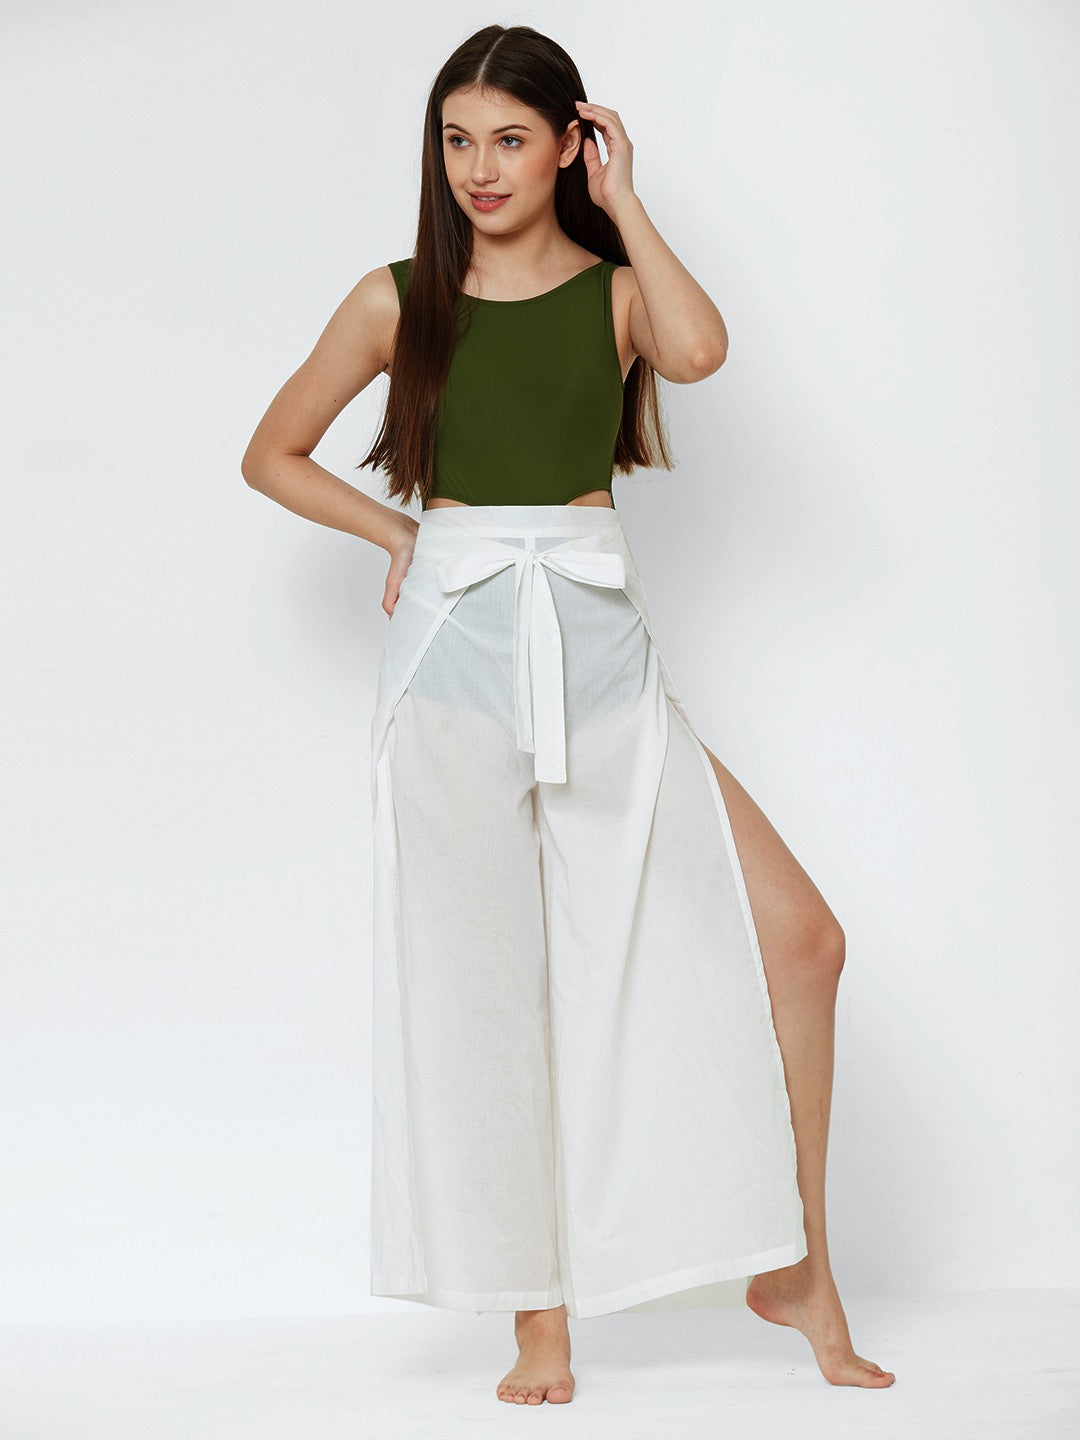 Buy Blue Trousers & Pants for Women by Vero Moda Online | Ajio.com